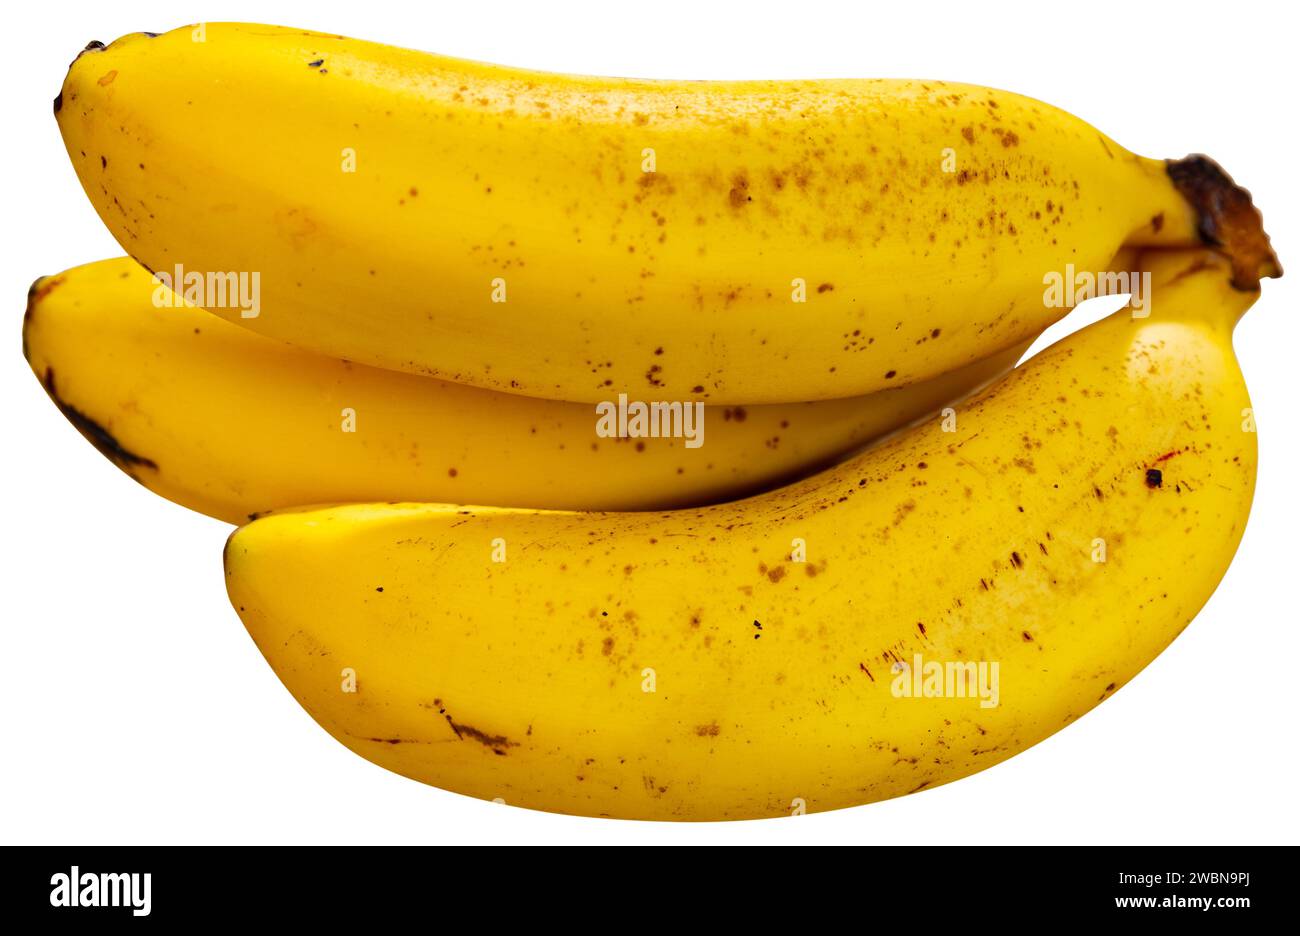 Image of bananas Stock Photo